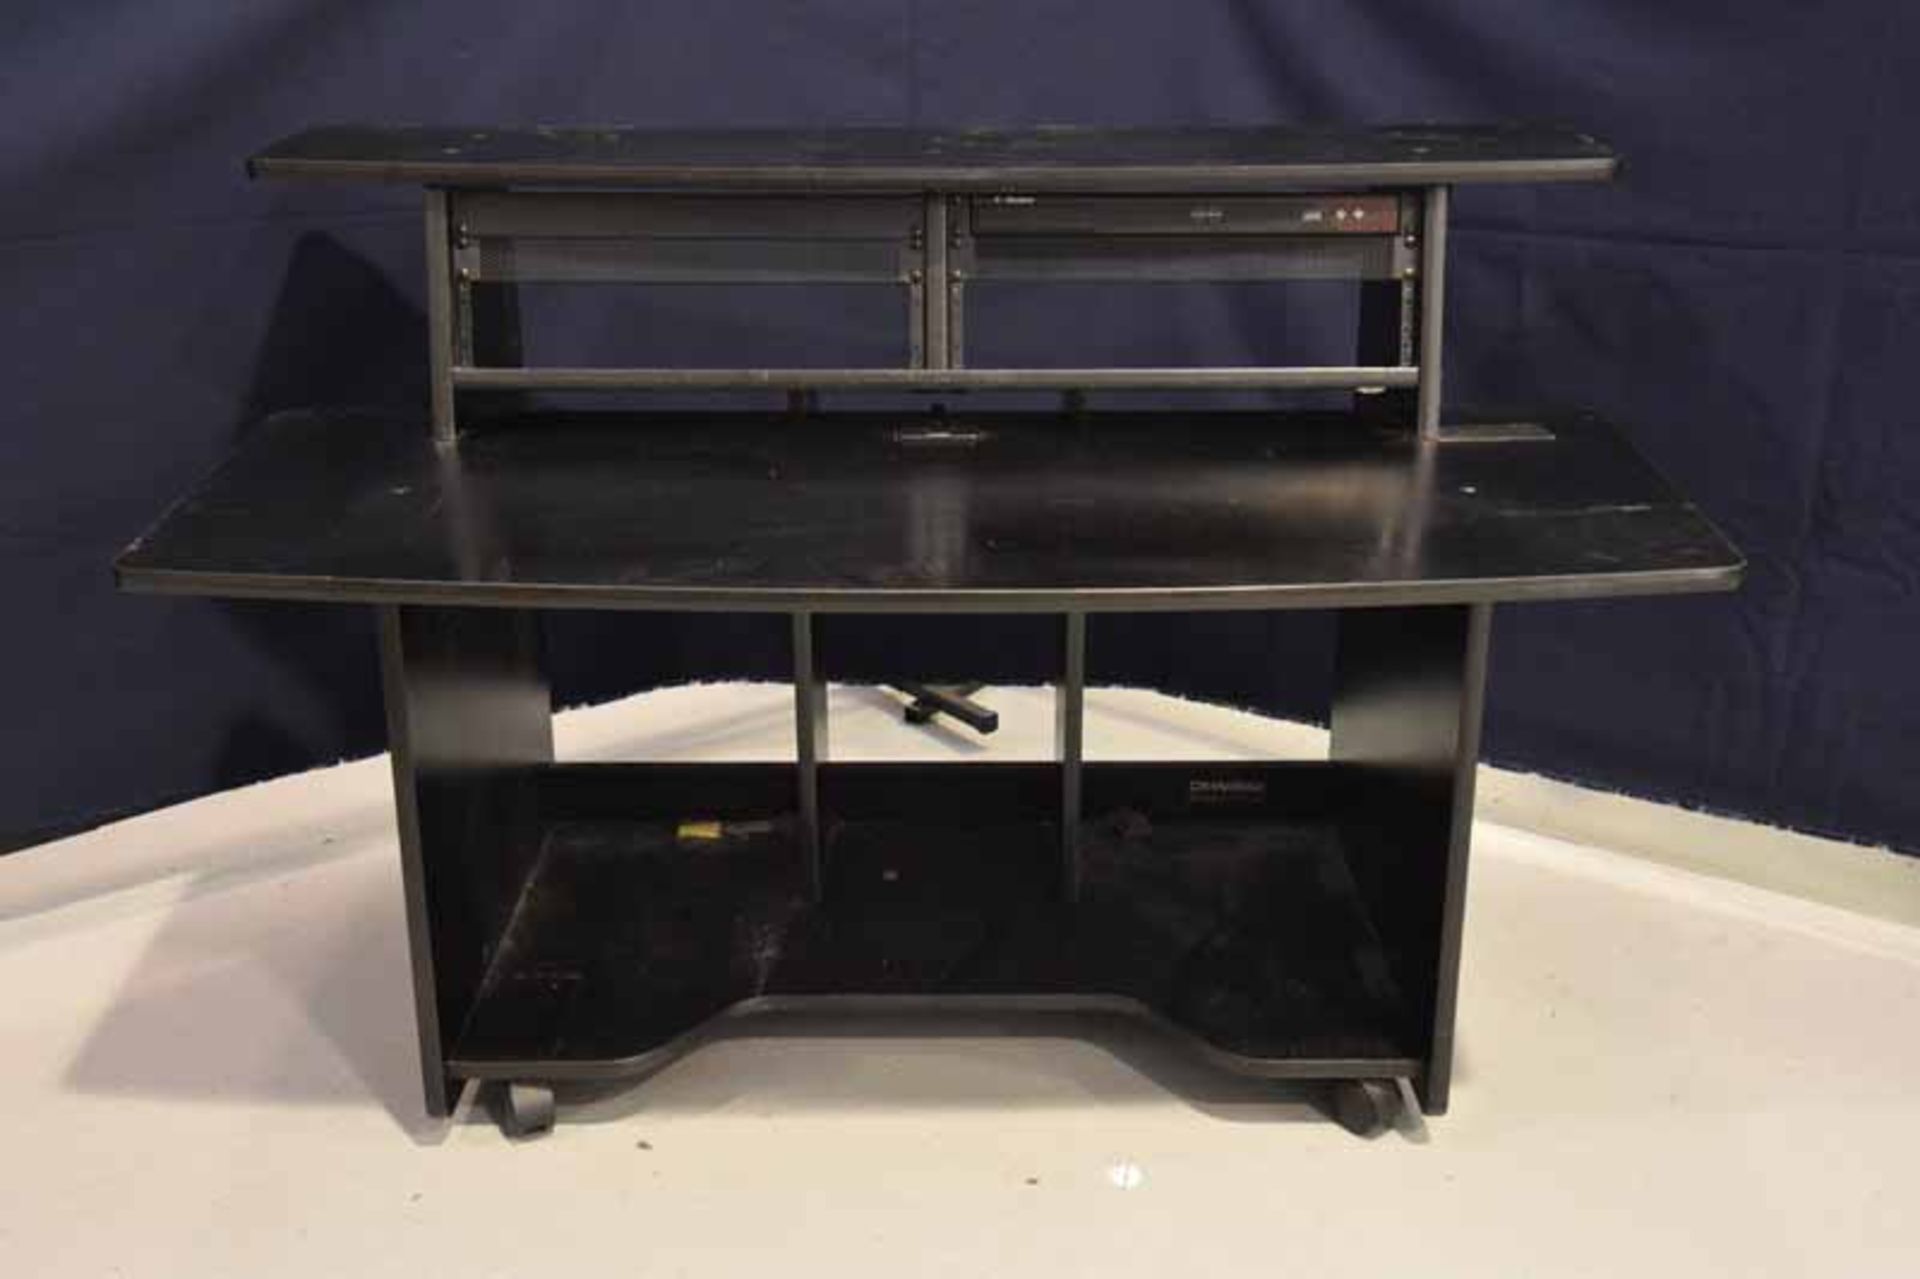 1 - Omnirax rolling desk (55" L x 31" W x 37" H) w/Gentner AP10 Telephone Interface